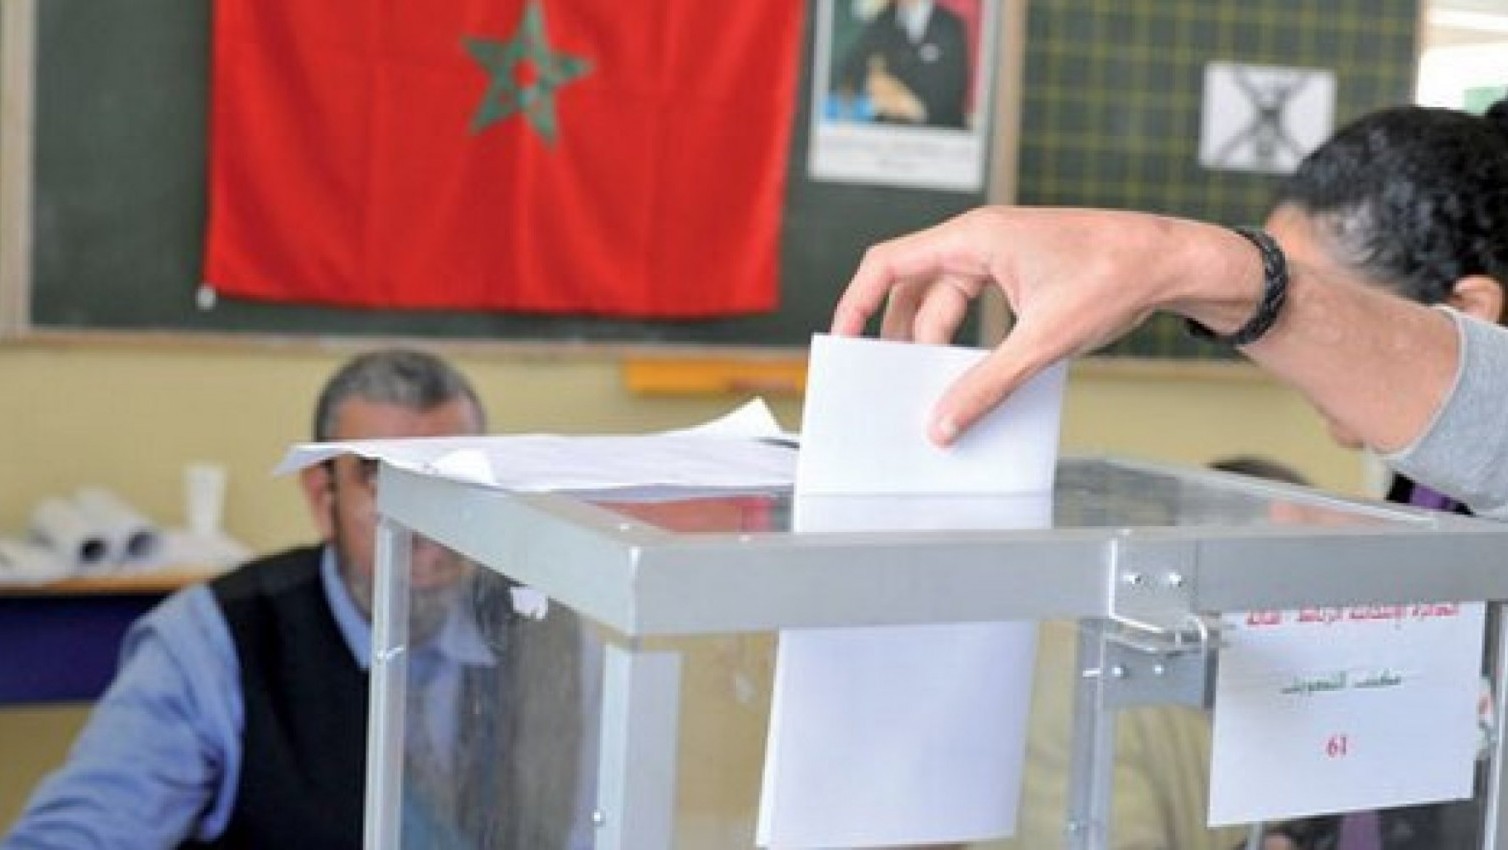 L'APCE observera les élections législatives au Maroc